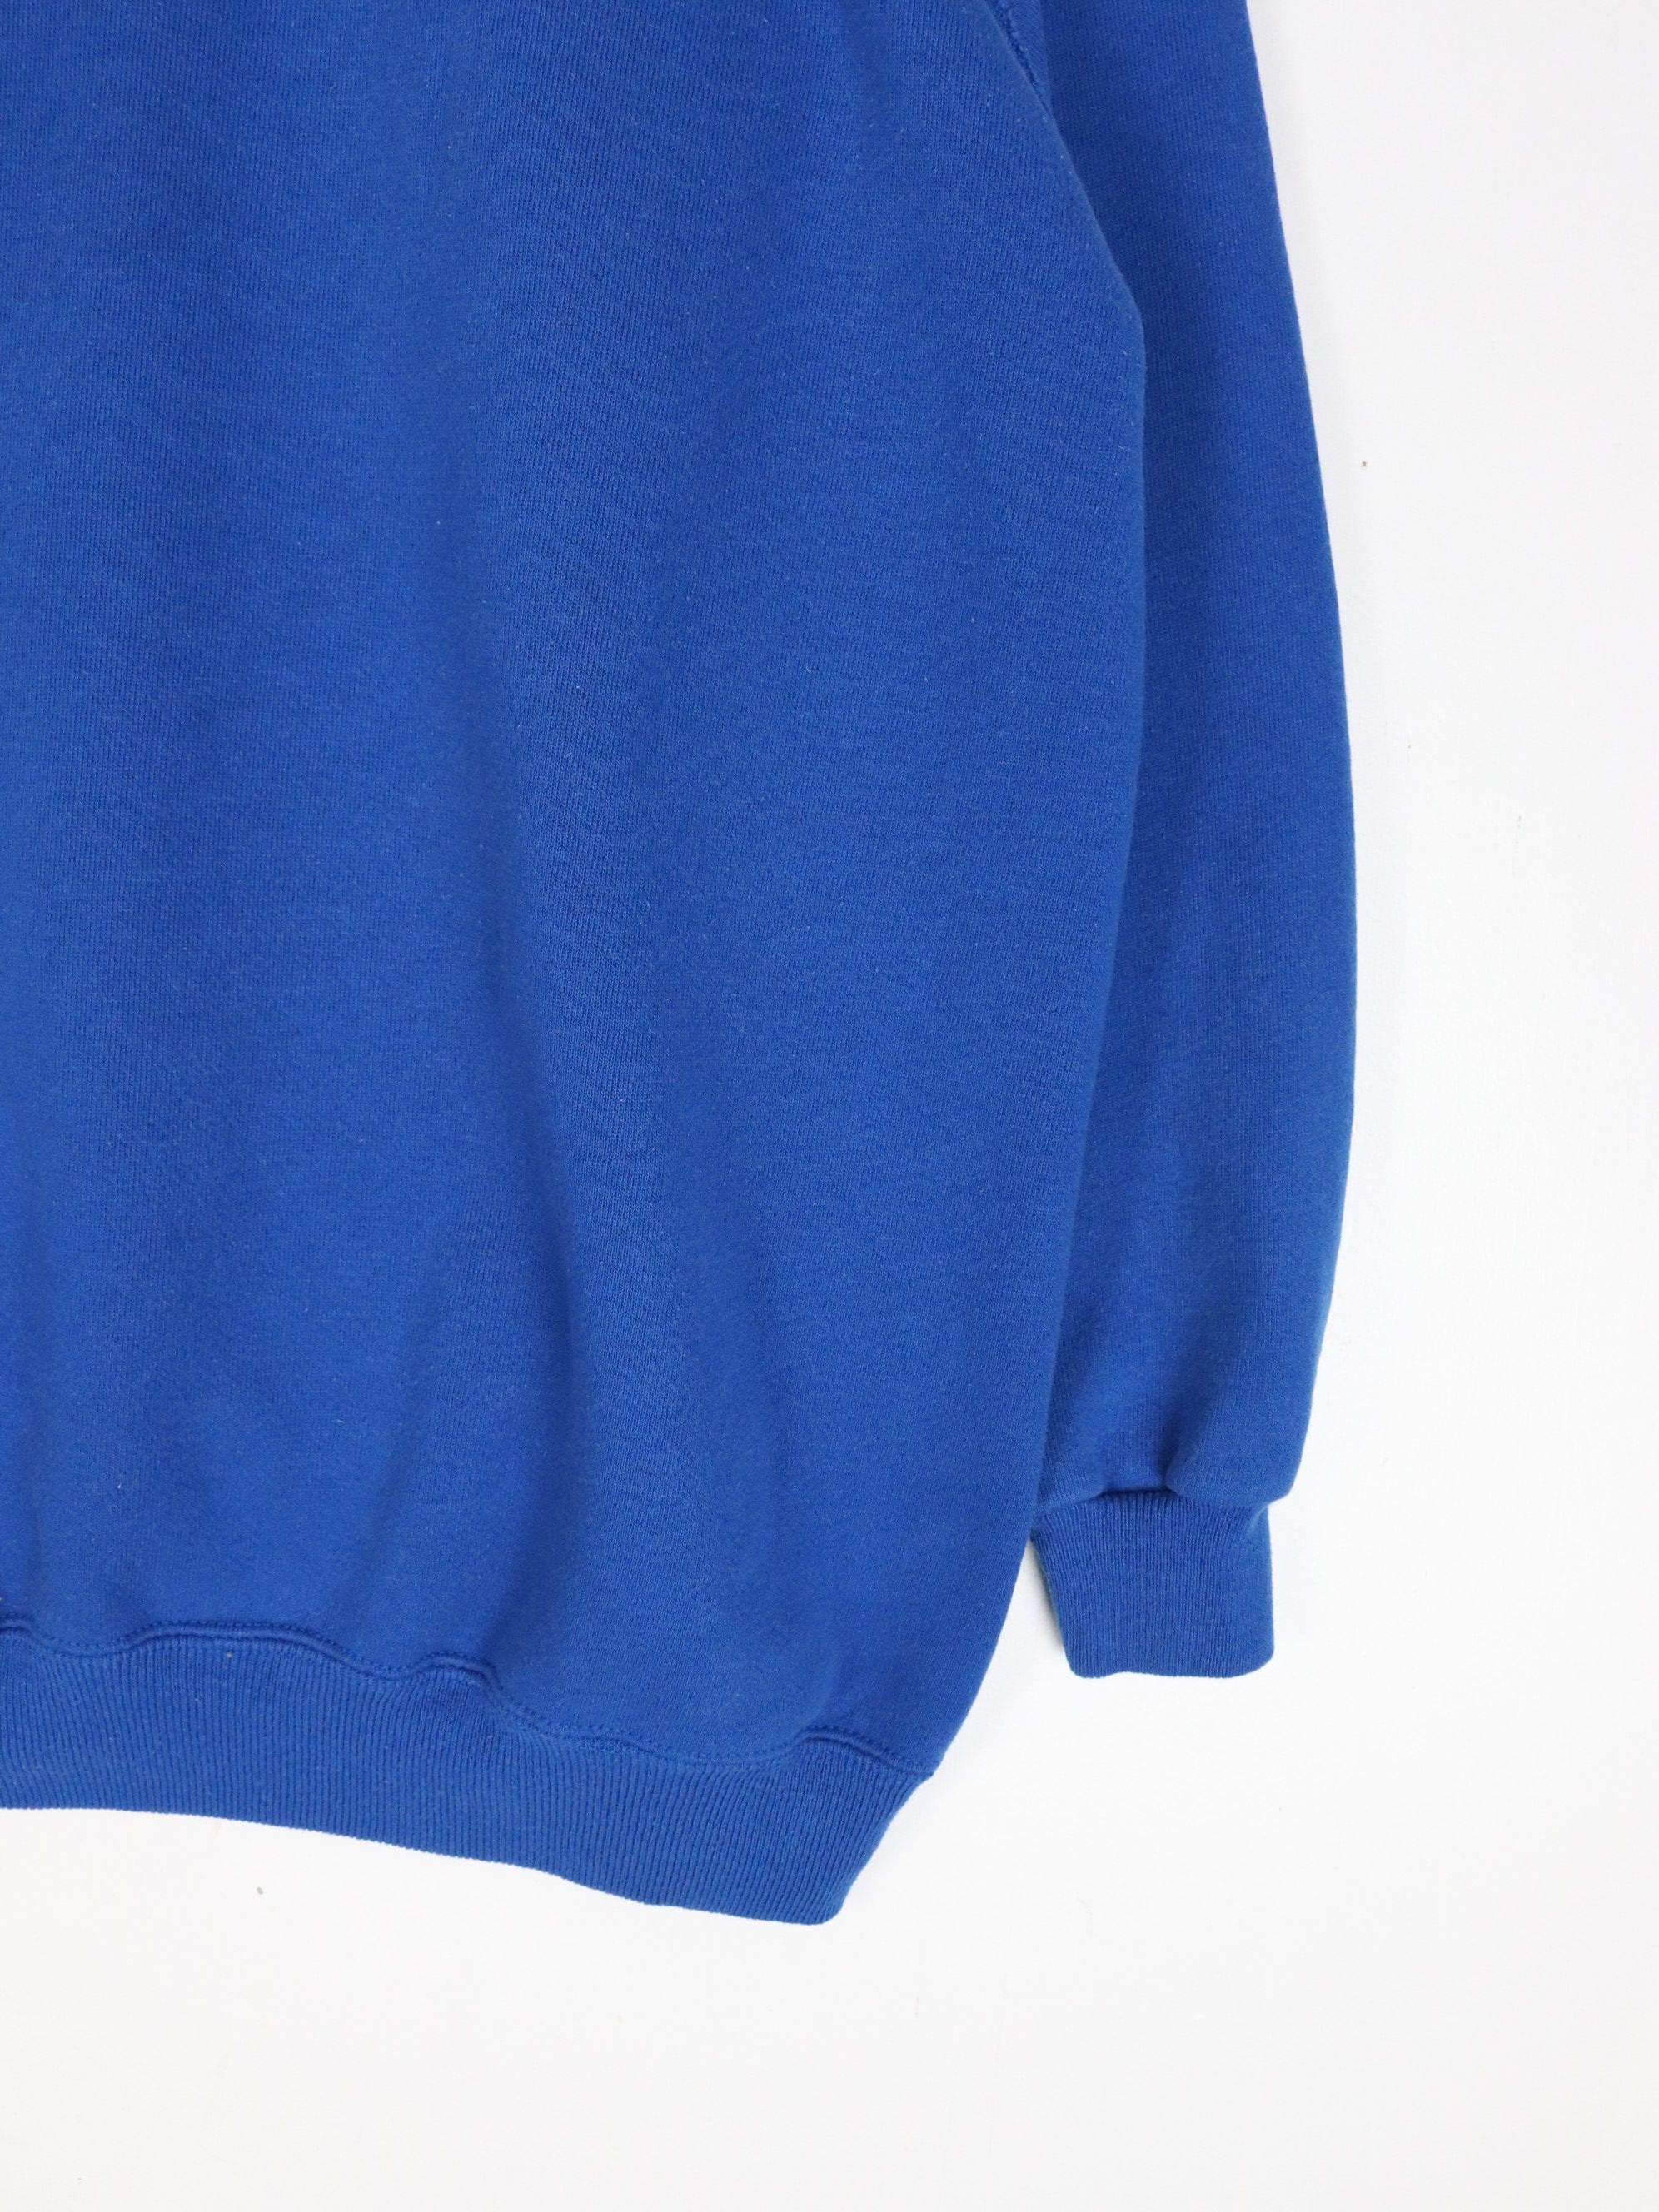 Vintage Hanes Her Ways Sweatshirt Mens 2XL Blue Blank Sweater